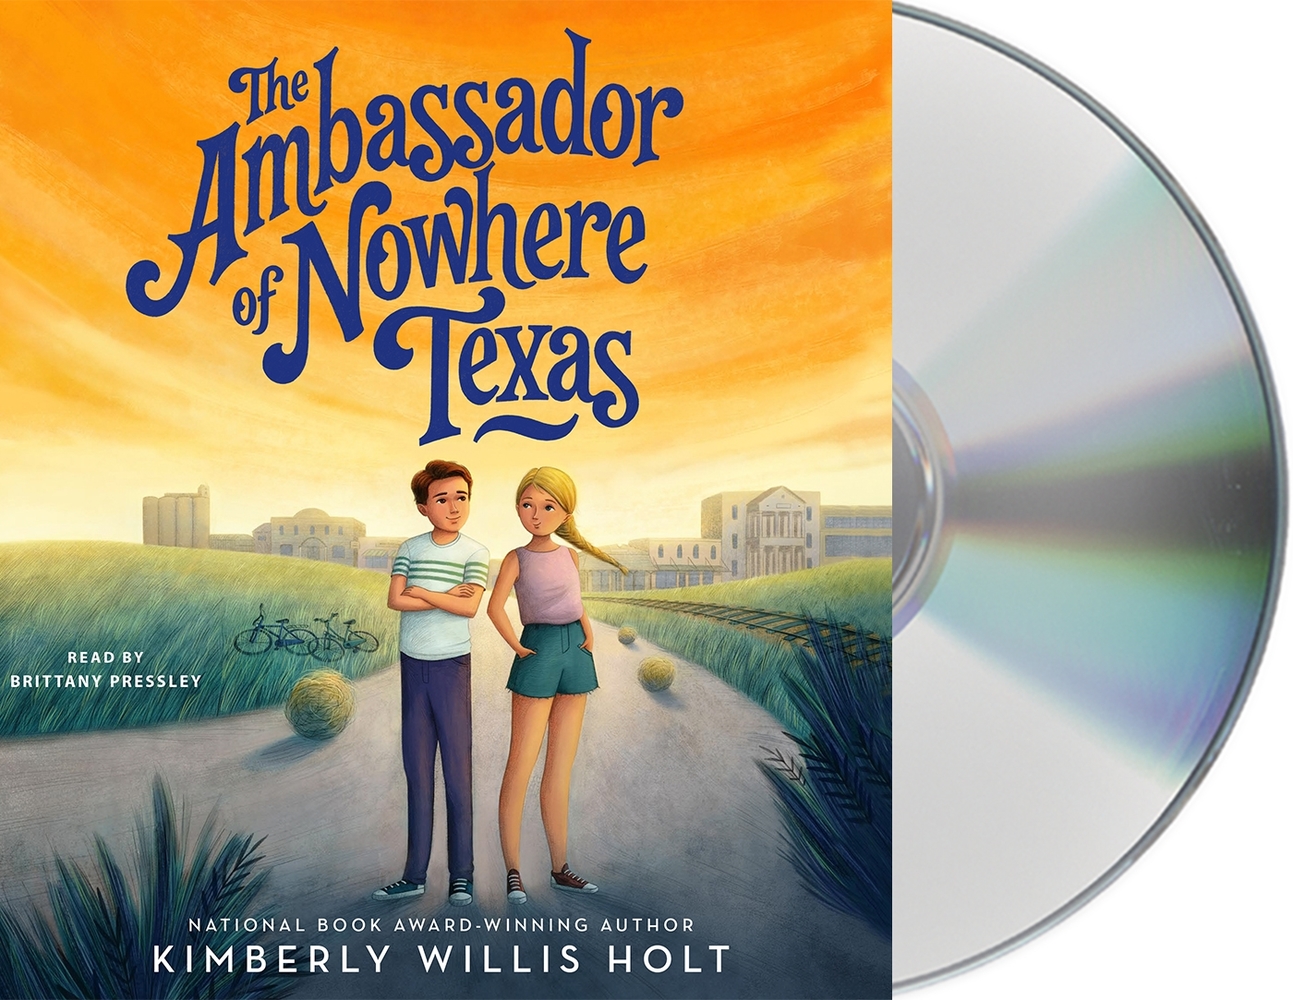 The Ambassador of Nowhere, Texas